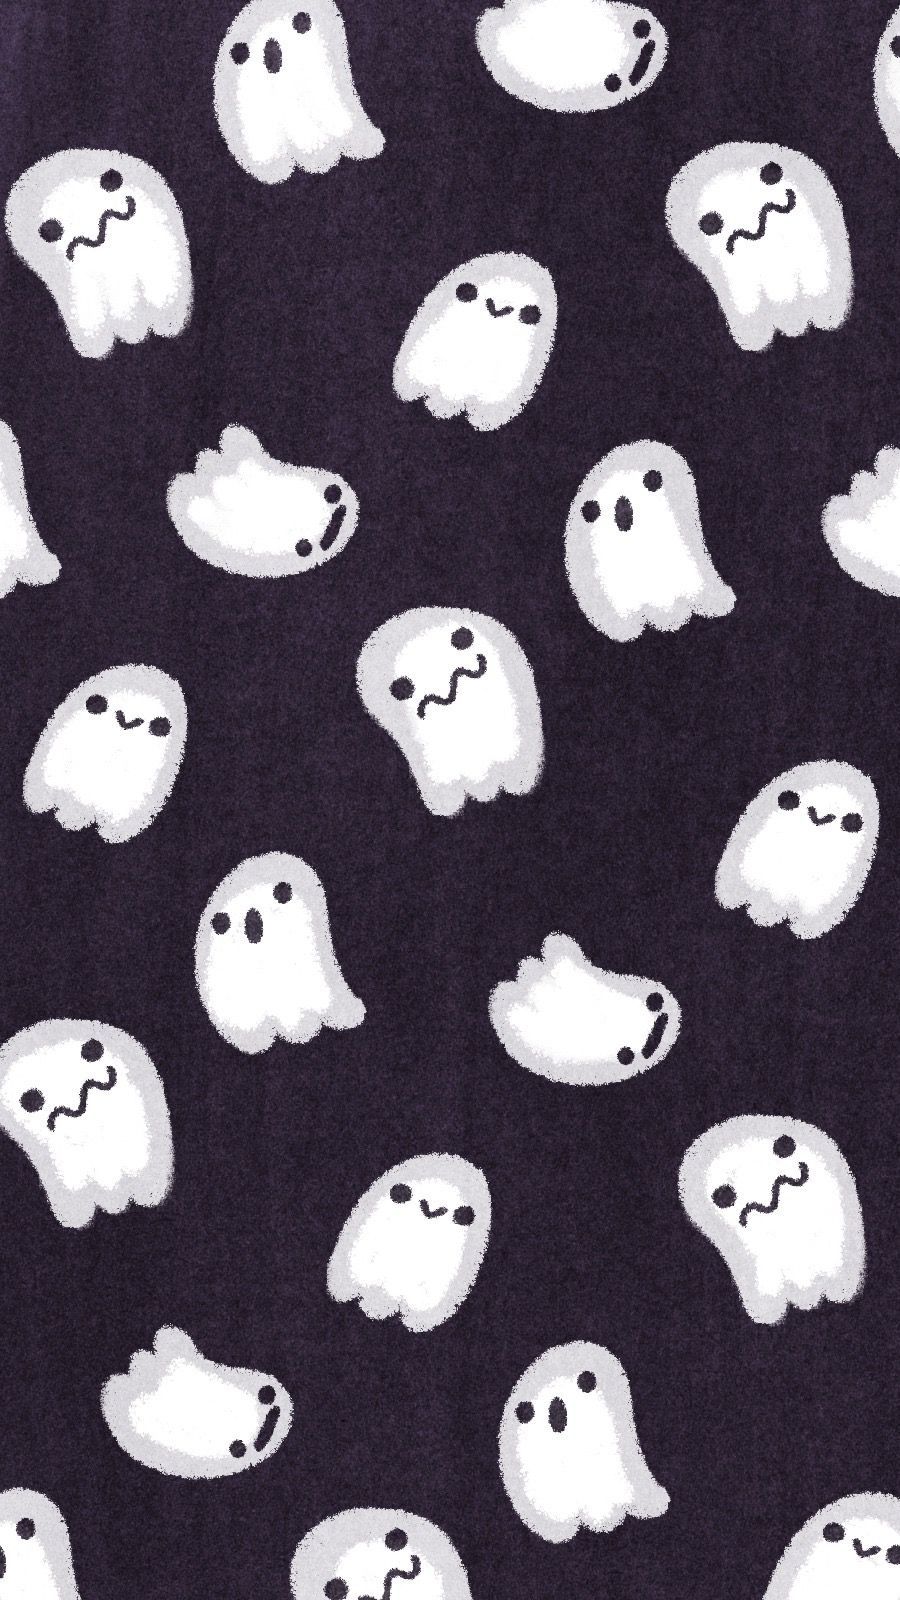 Cute Ghost Halloween Wallpapers - Wallpaper Cave